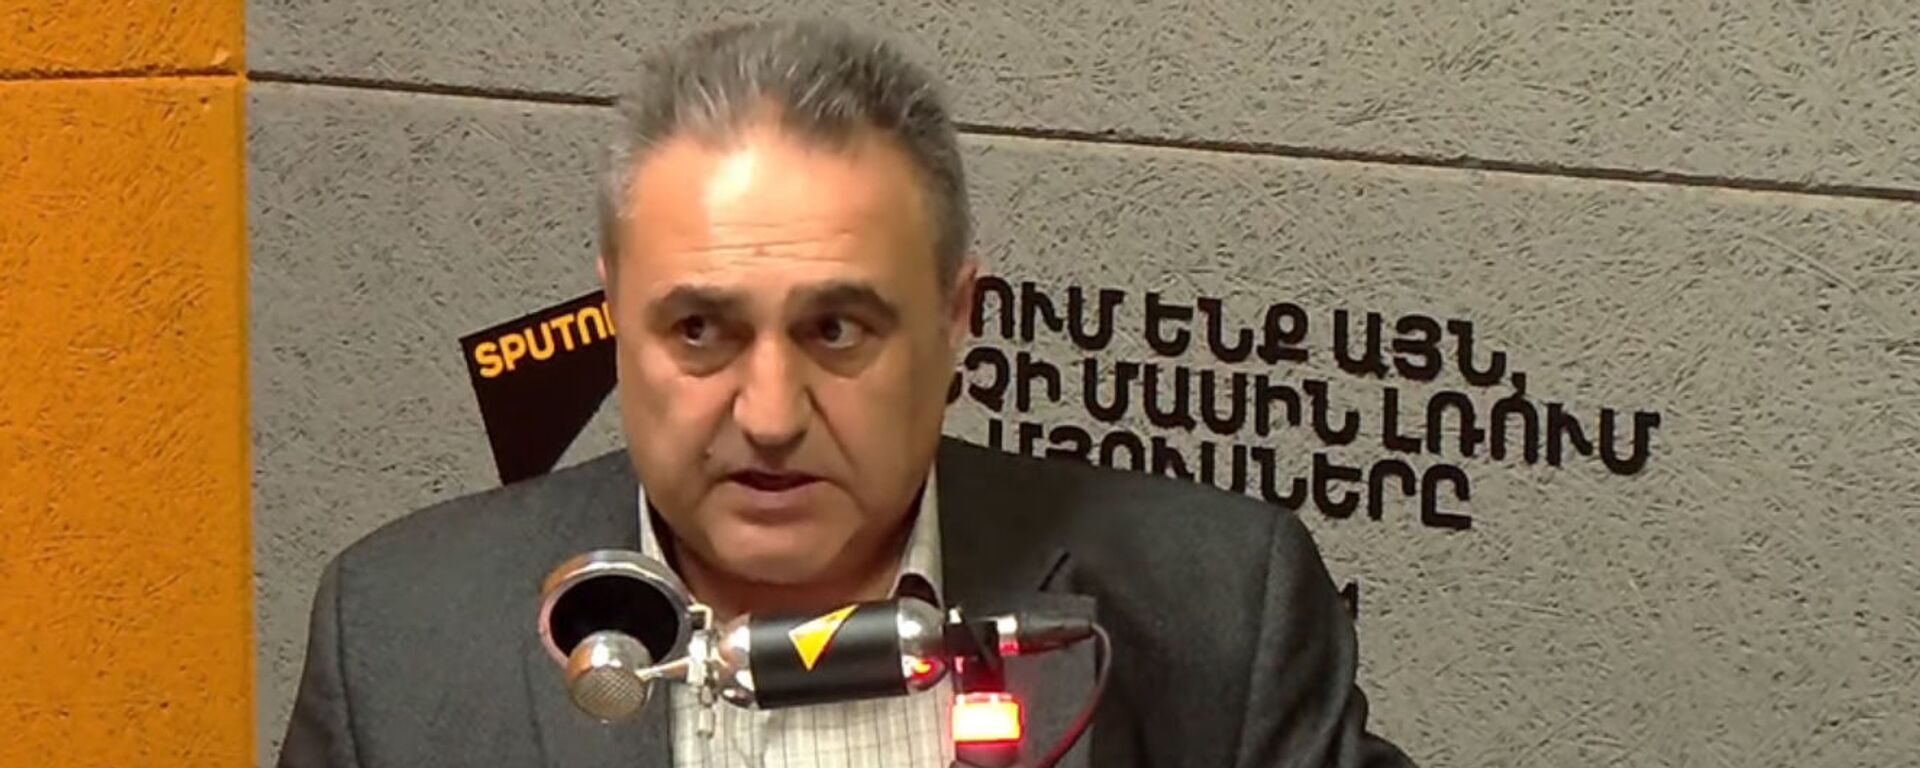 Политолог Армен Багдасарян в гостях радио Sputnik Армения - Sputnik Արմենիա, 1920, 09.07.2021